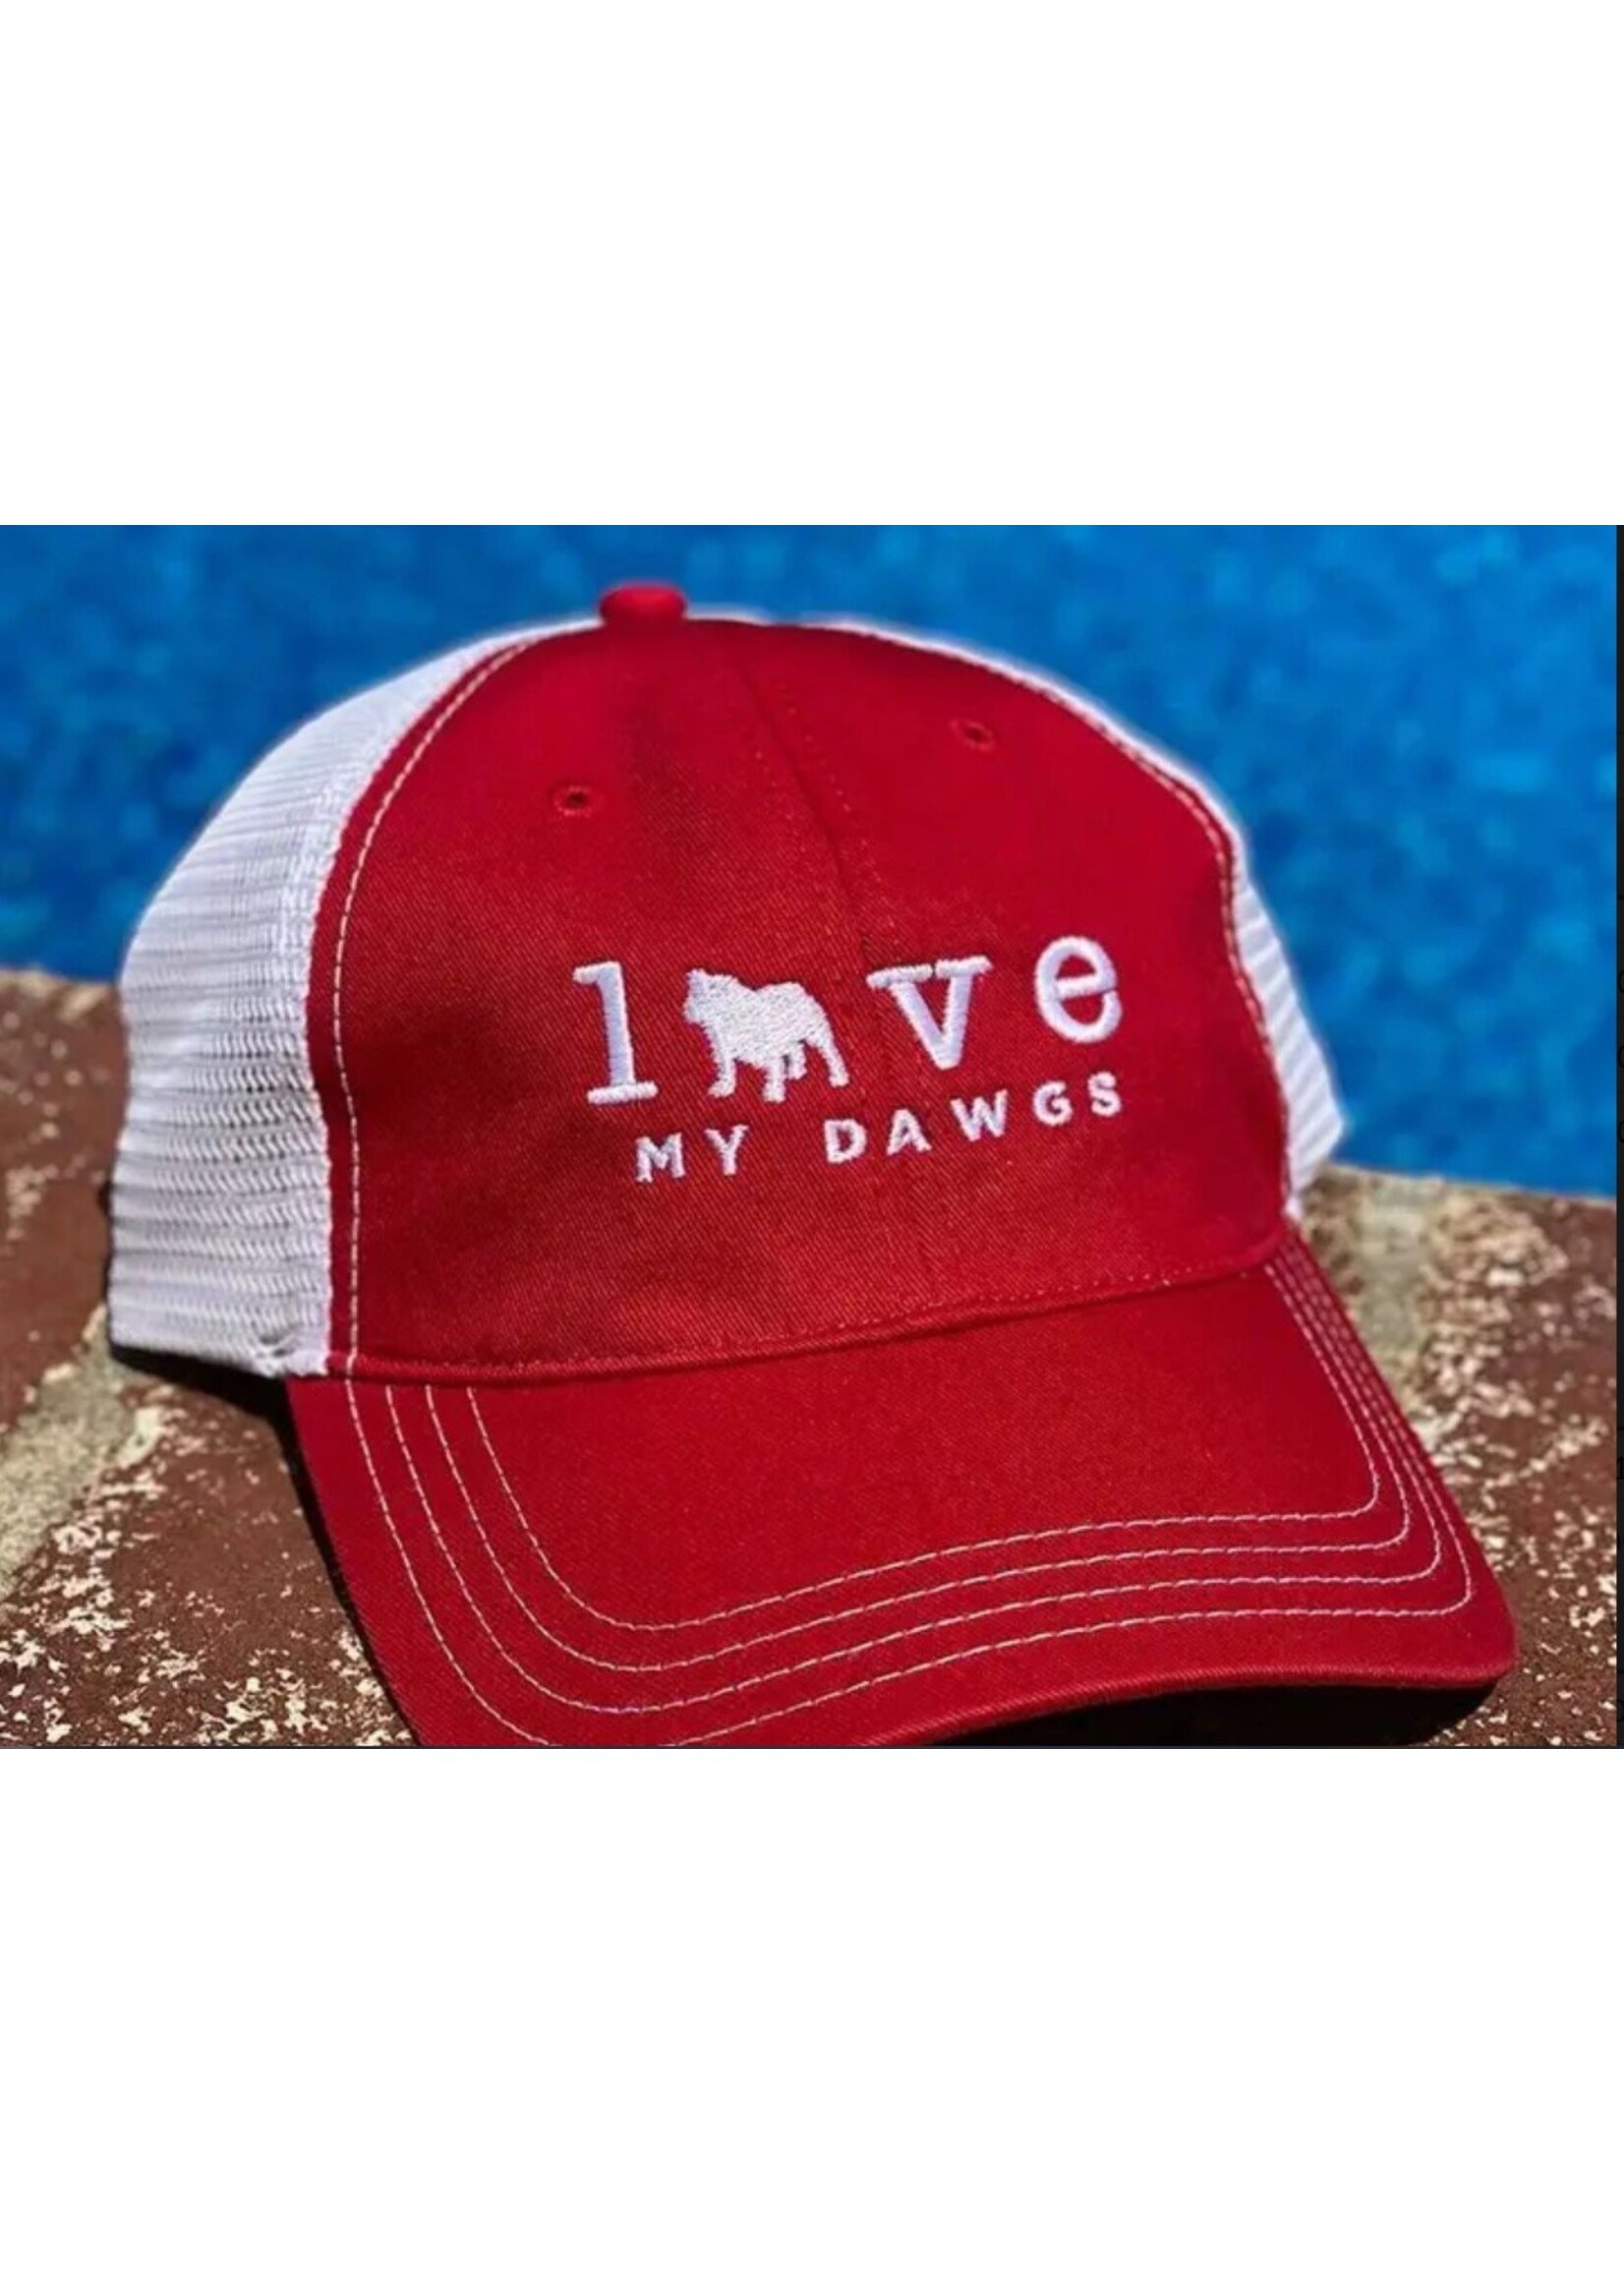 State Homegrown Georgia Aztec Dawg Trucker Hat